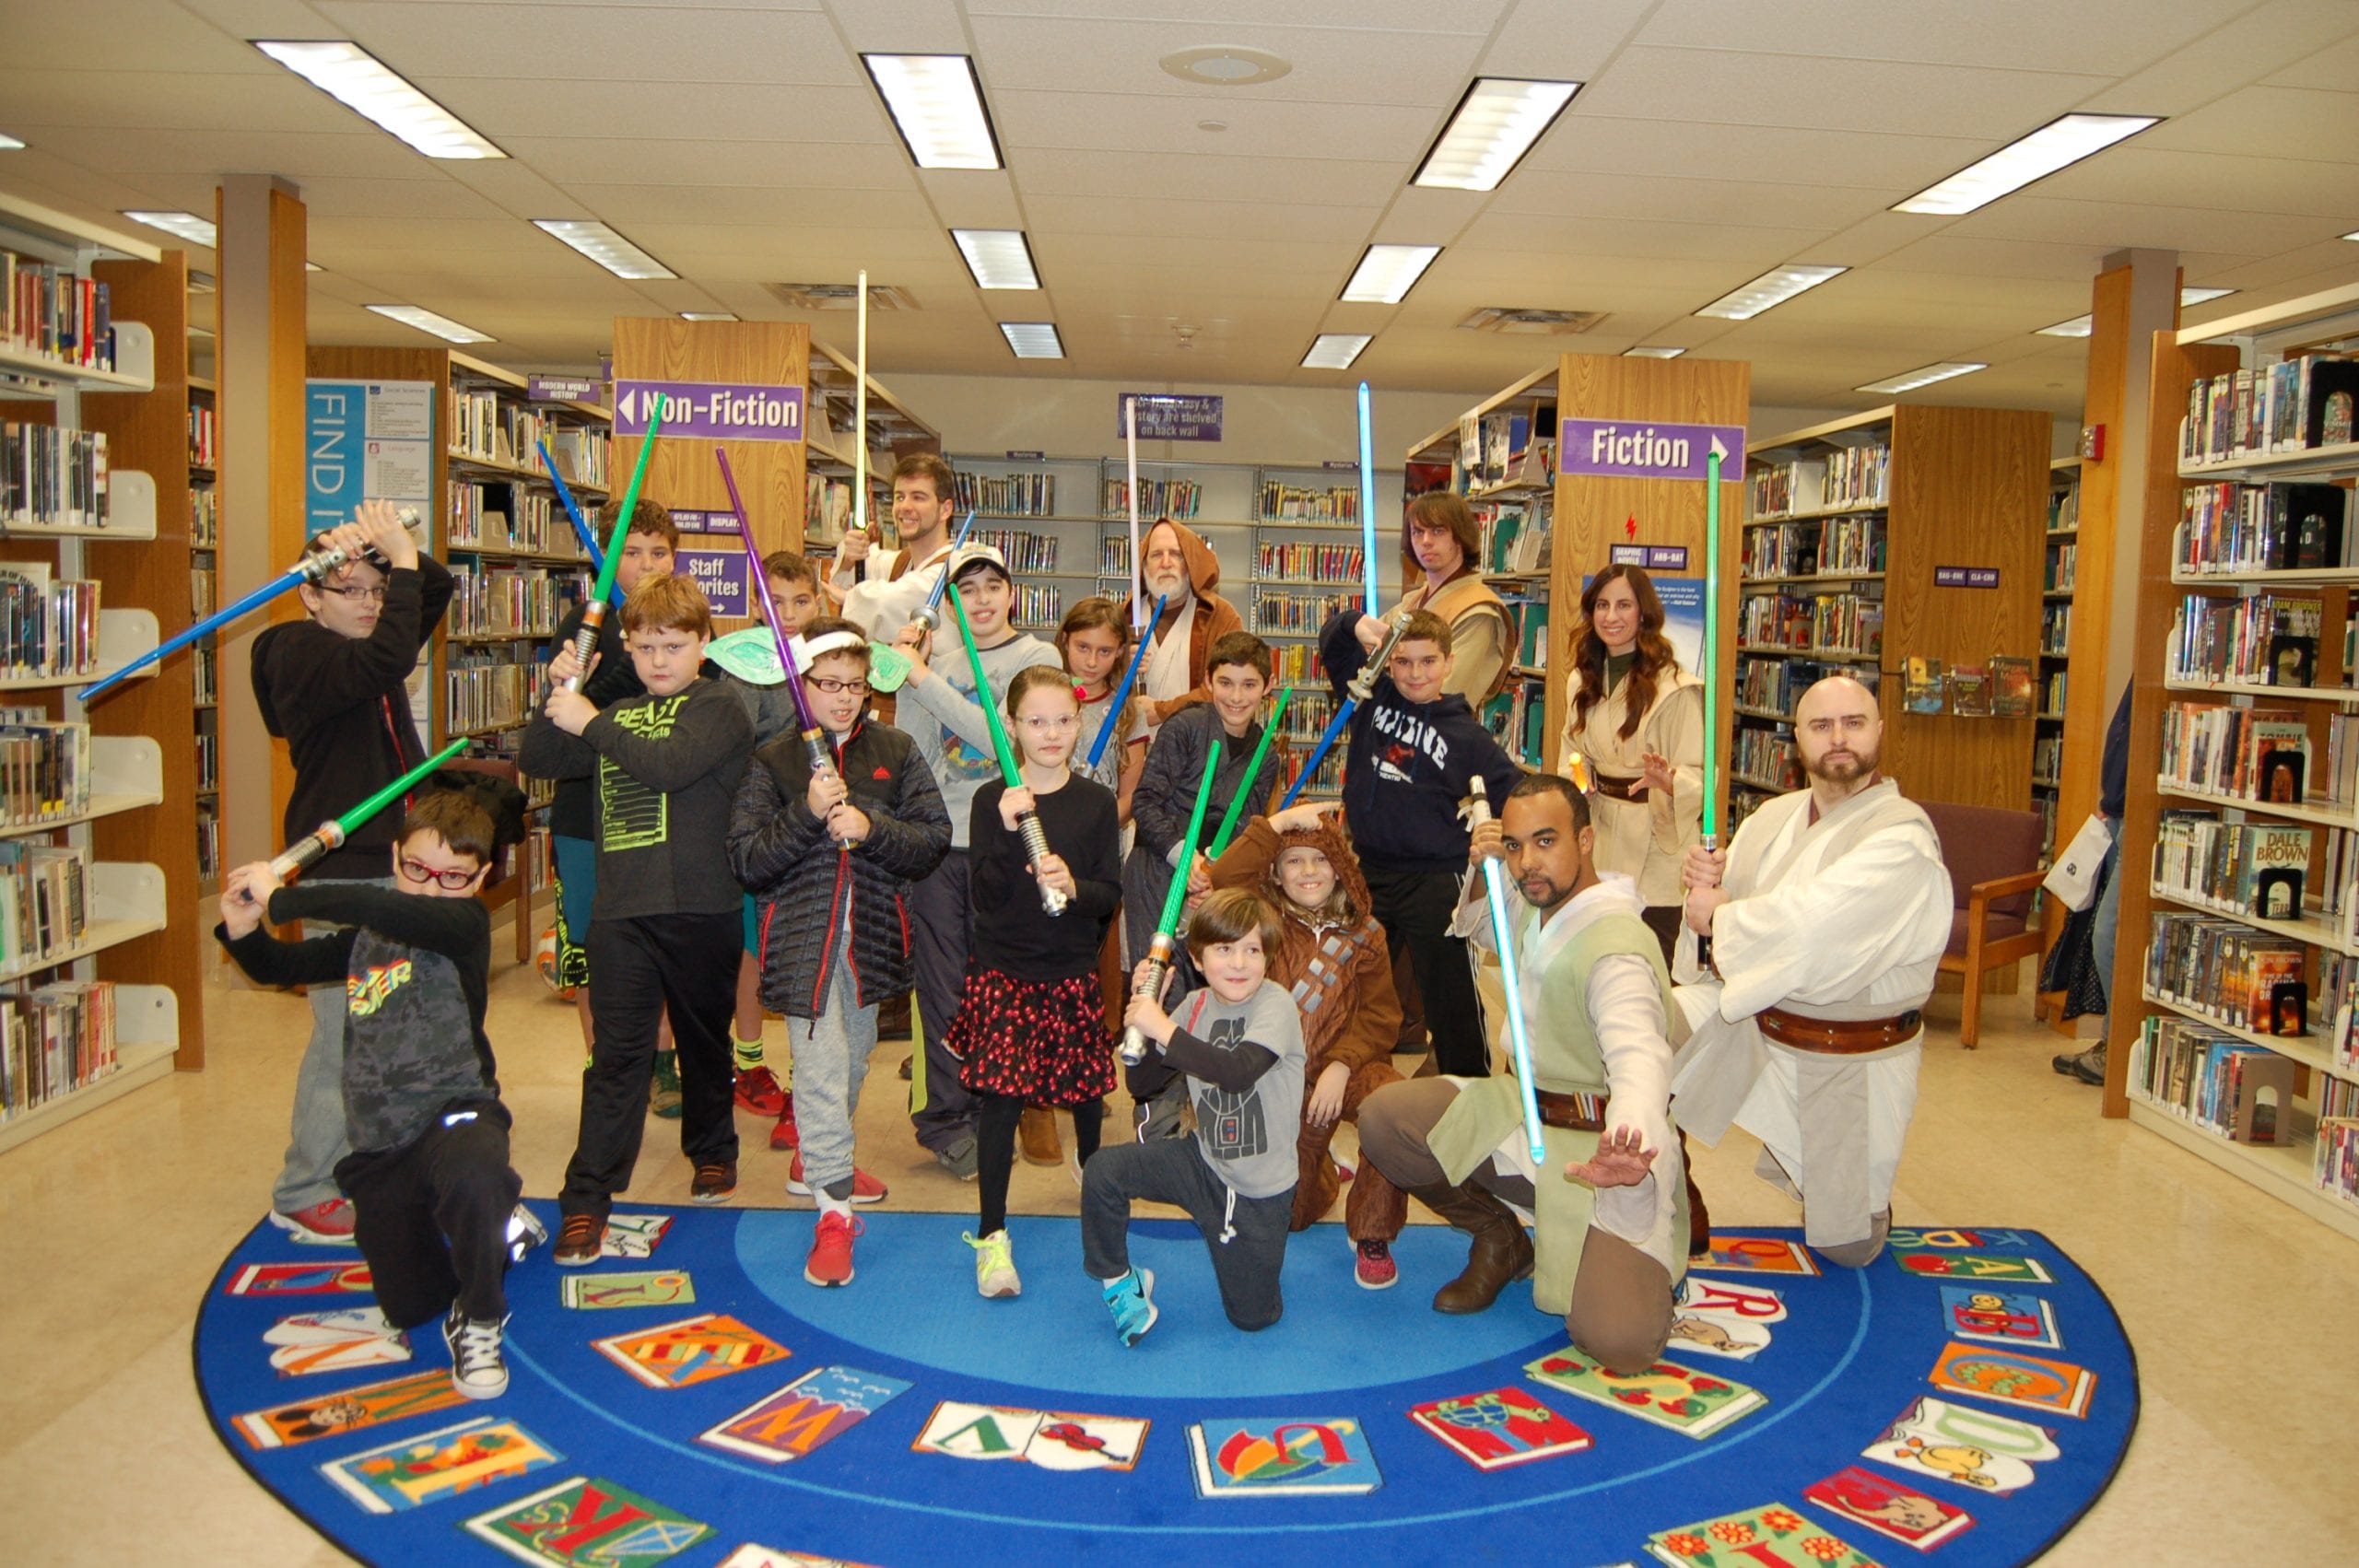 Port Jefferson Free Library hosts Star Wars Day | TBR News Media